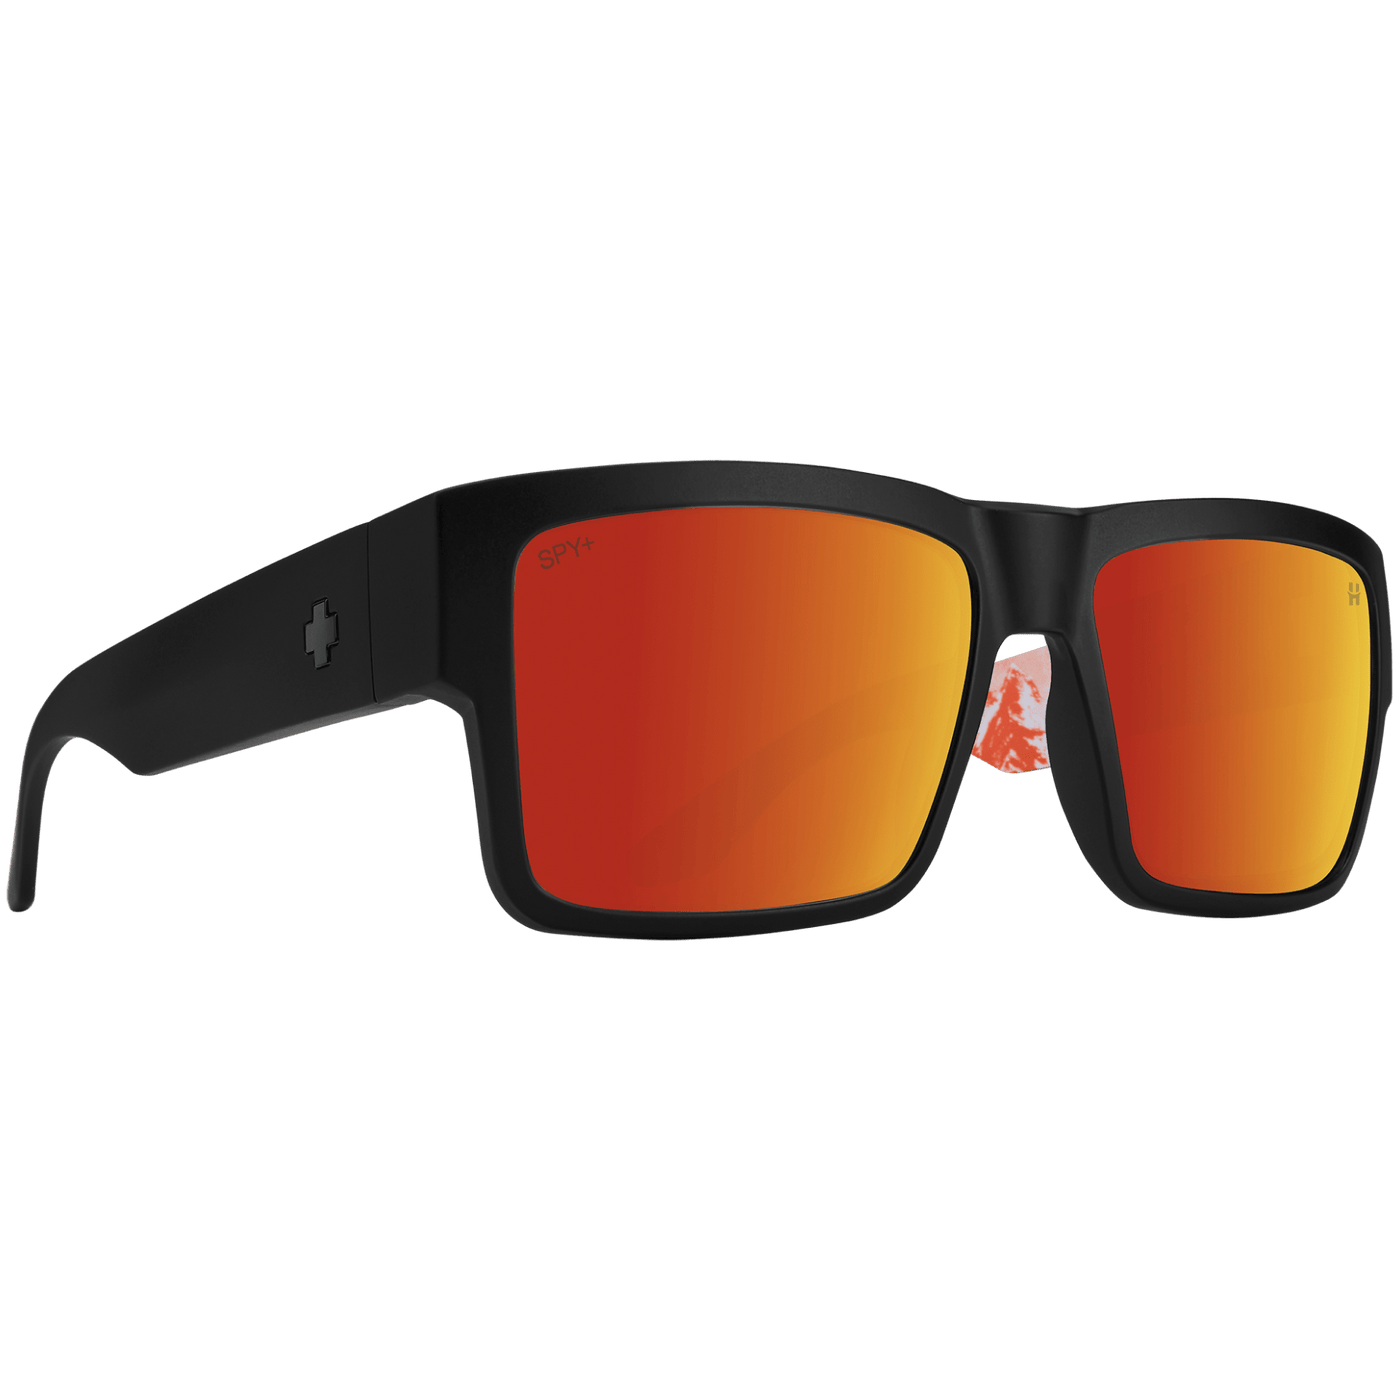 SPY CYRUS Sunglasses, Happy Lens - Orange 8Lines Shop - Fast Shipping